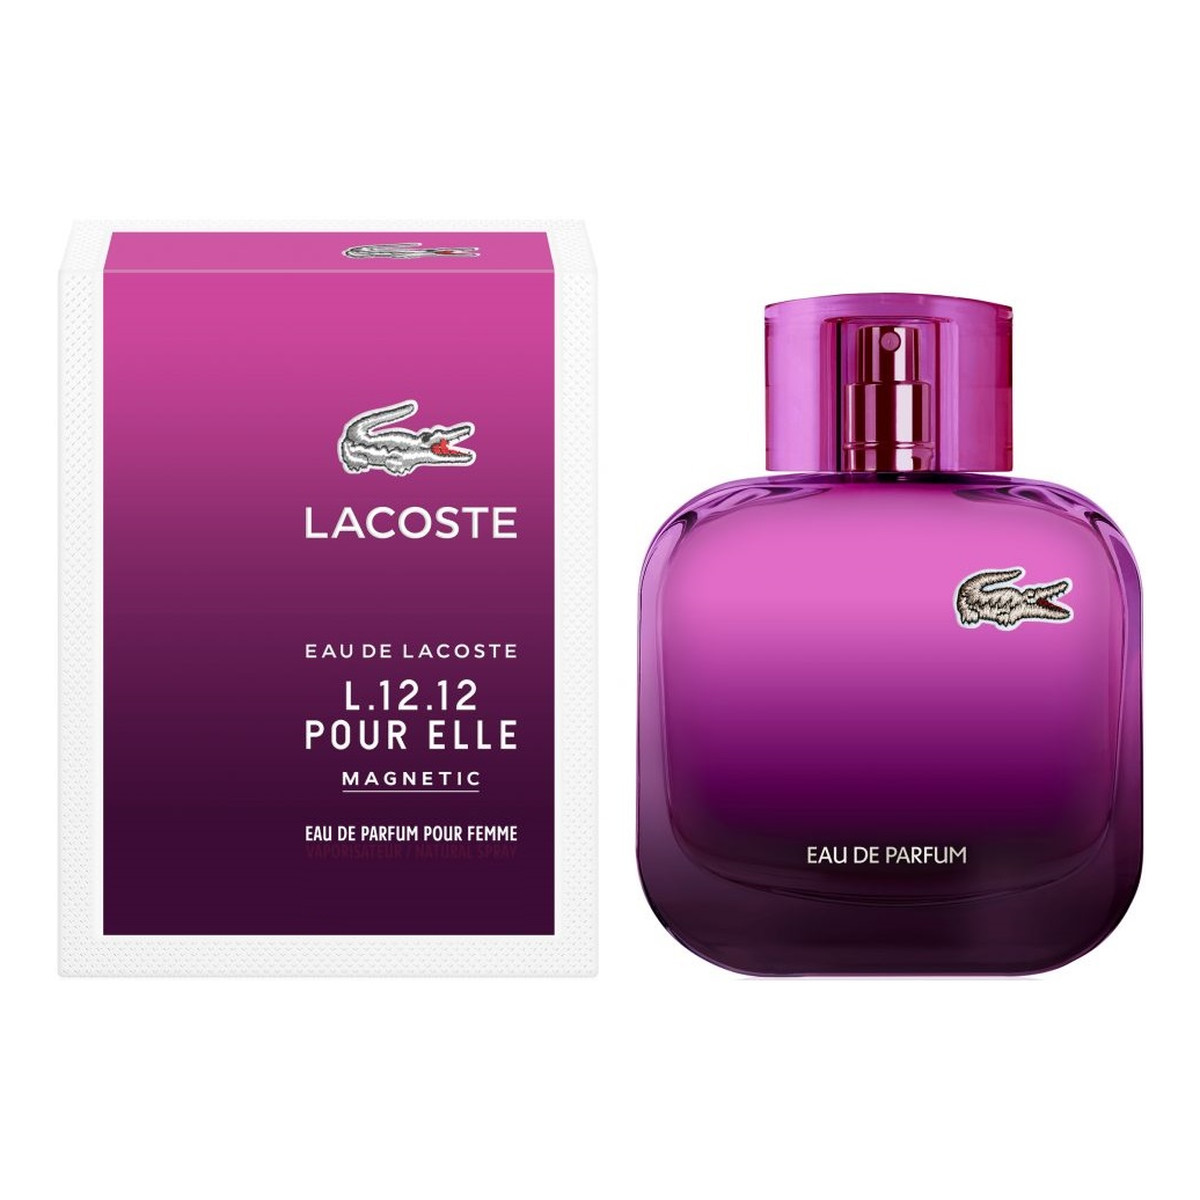 Lacoste L.12.12 Pour Elle Magnetic woda perfumowana 45ml